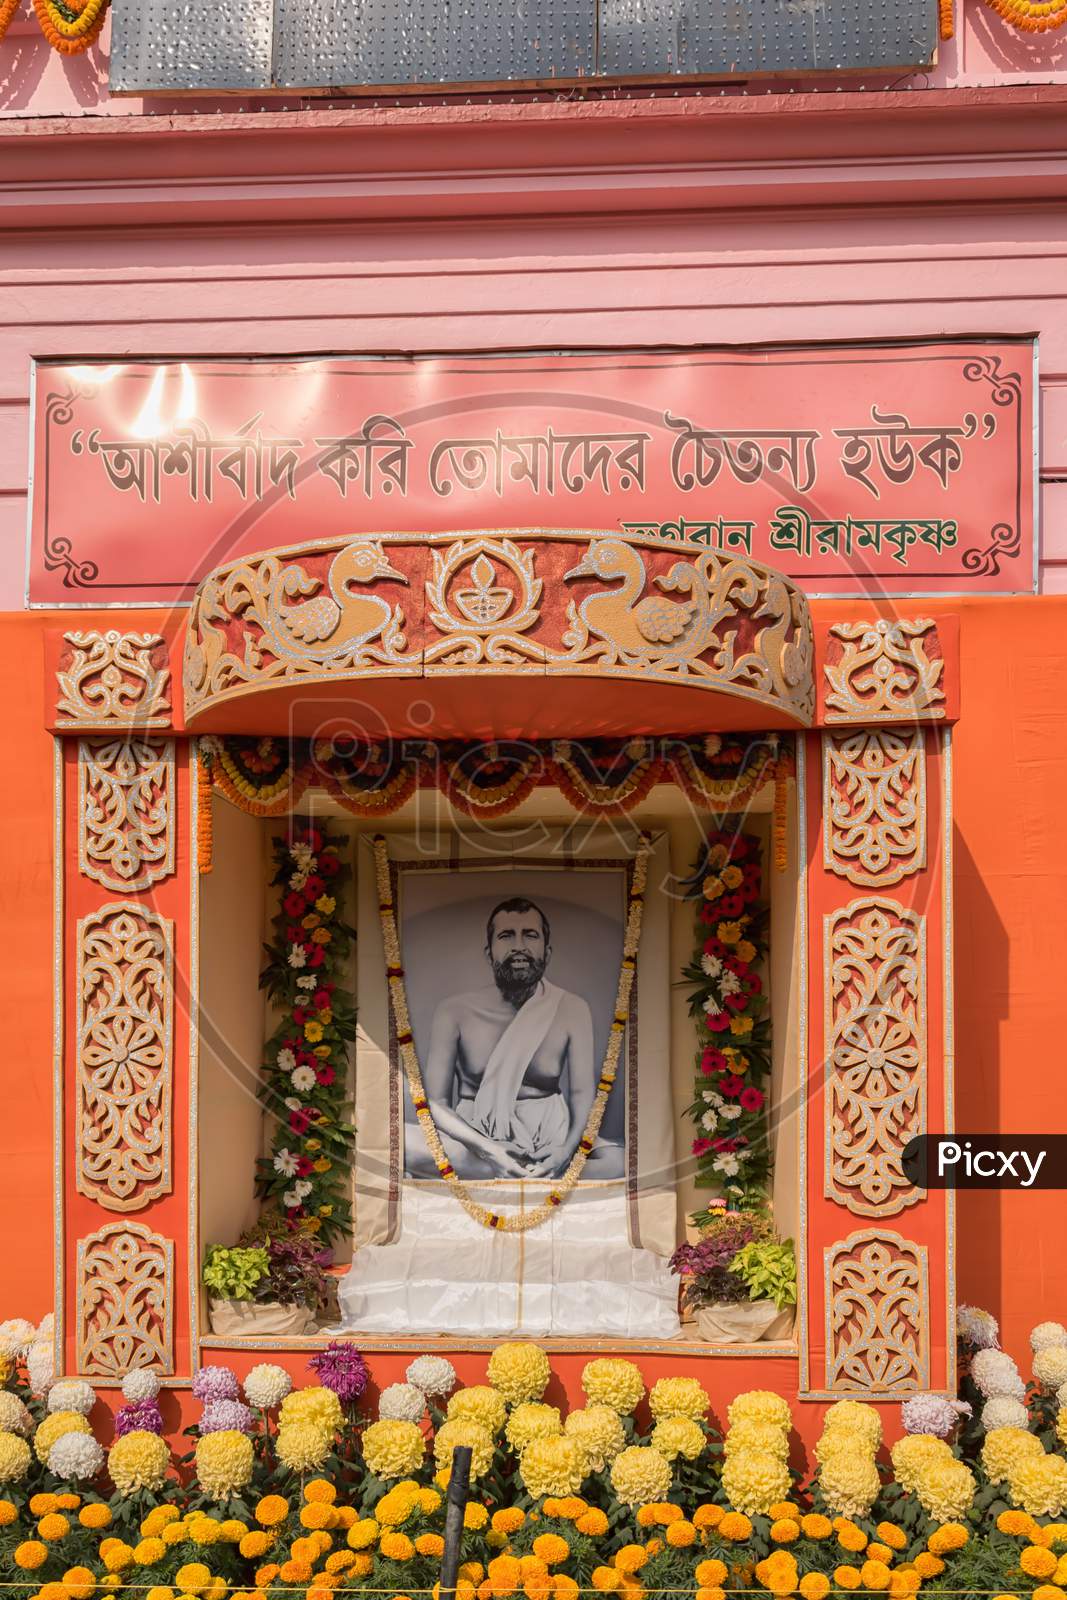 Picture Of Swami Ramakrishna Decorated For Kolpotoru Utsab, At Cossipore Garden House Or Udyanbati, Present Ramakrishna Math In Kolkata, West Bengal, India On 1St January 2020